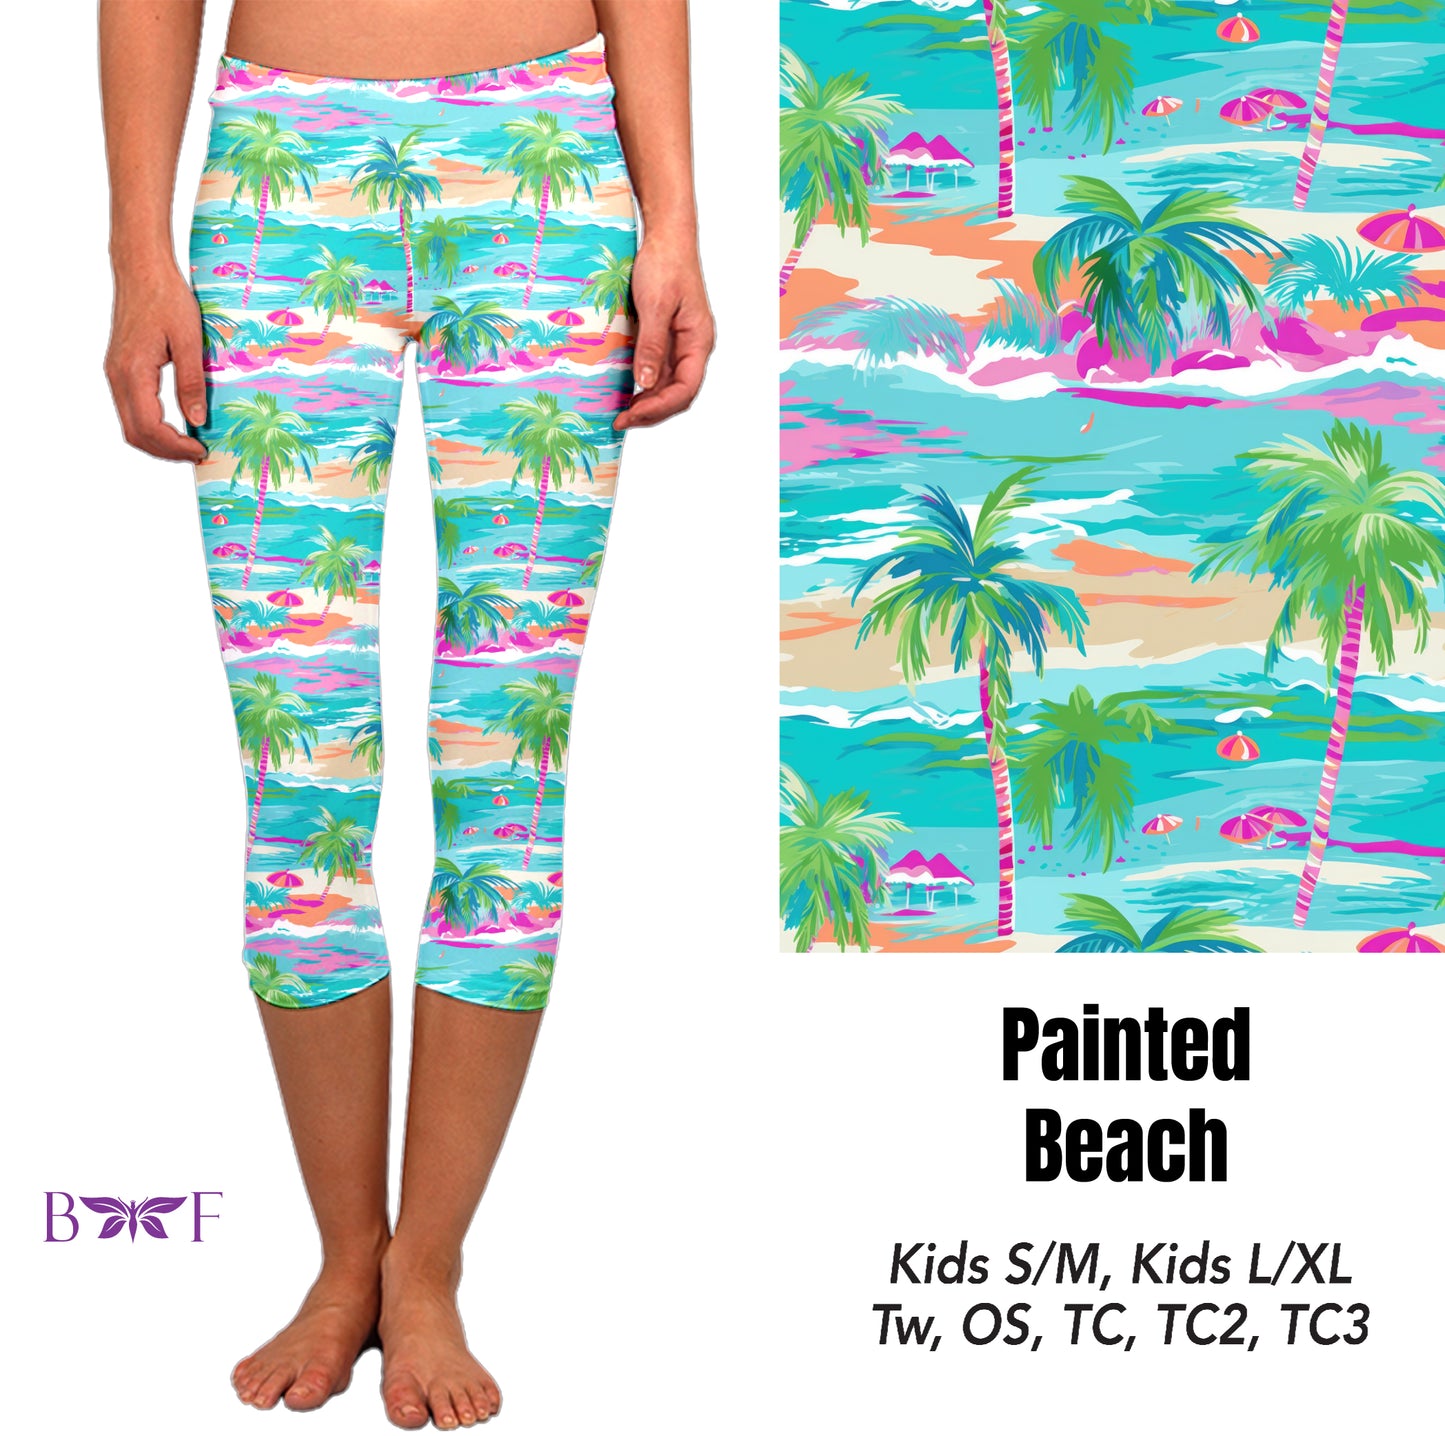 Painted beach preorder#0515